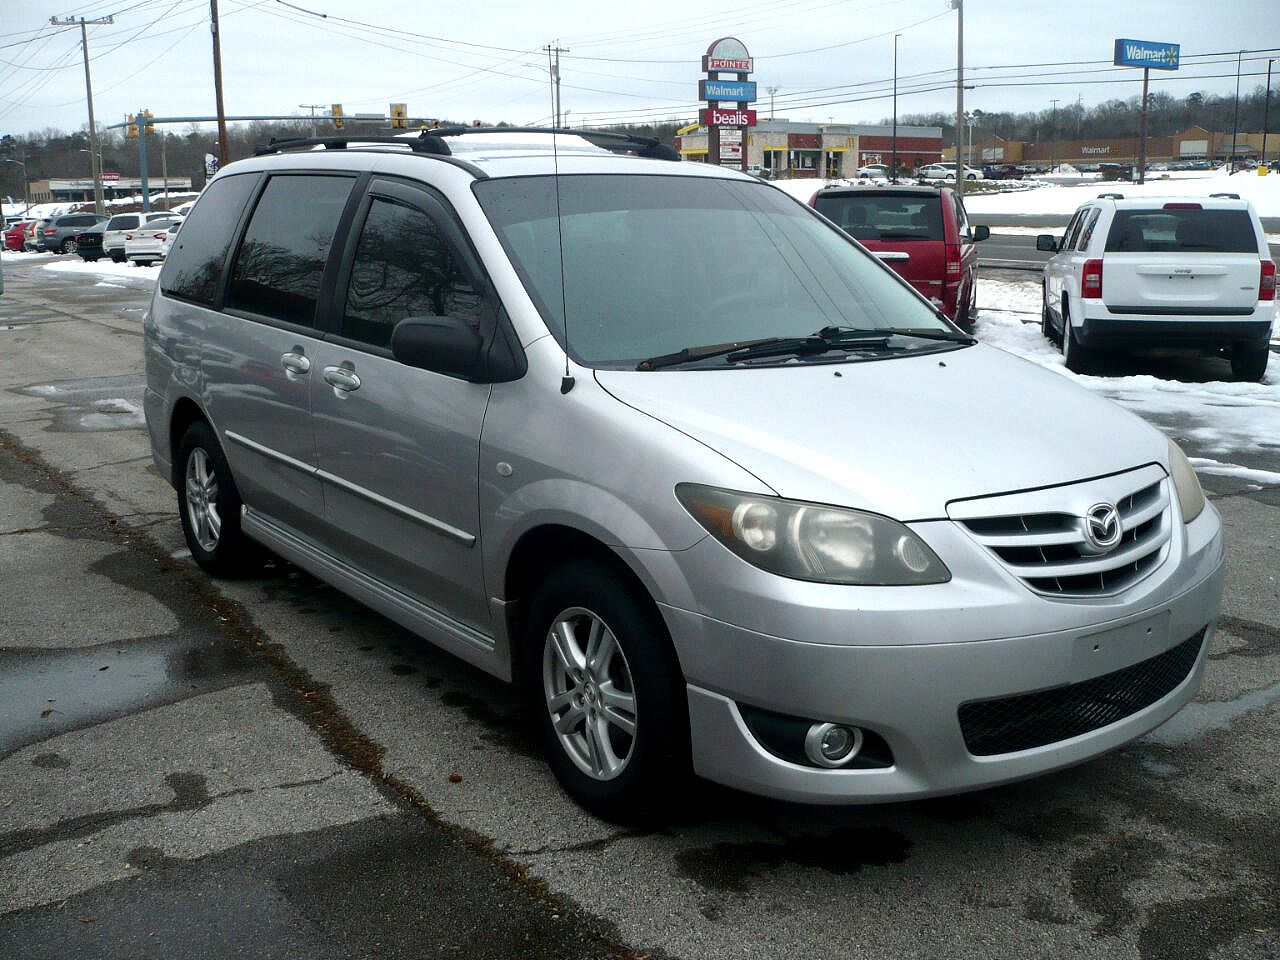 2005 Mazda MPV LX image 6